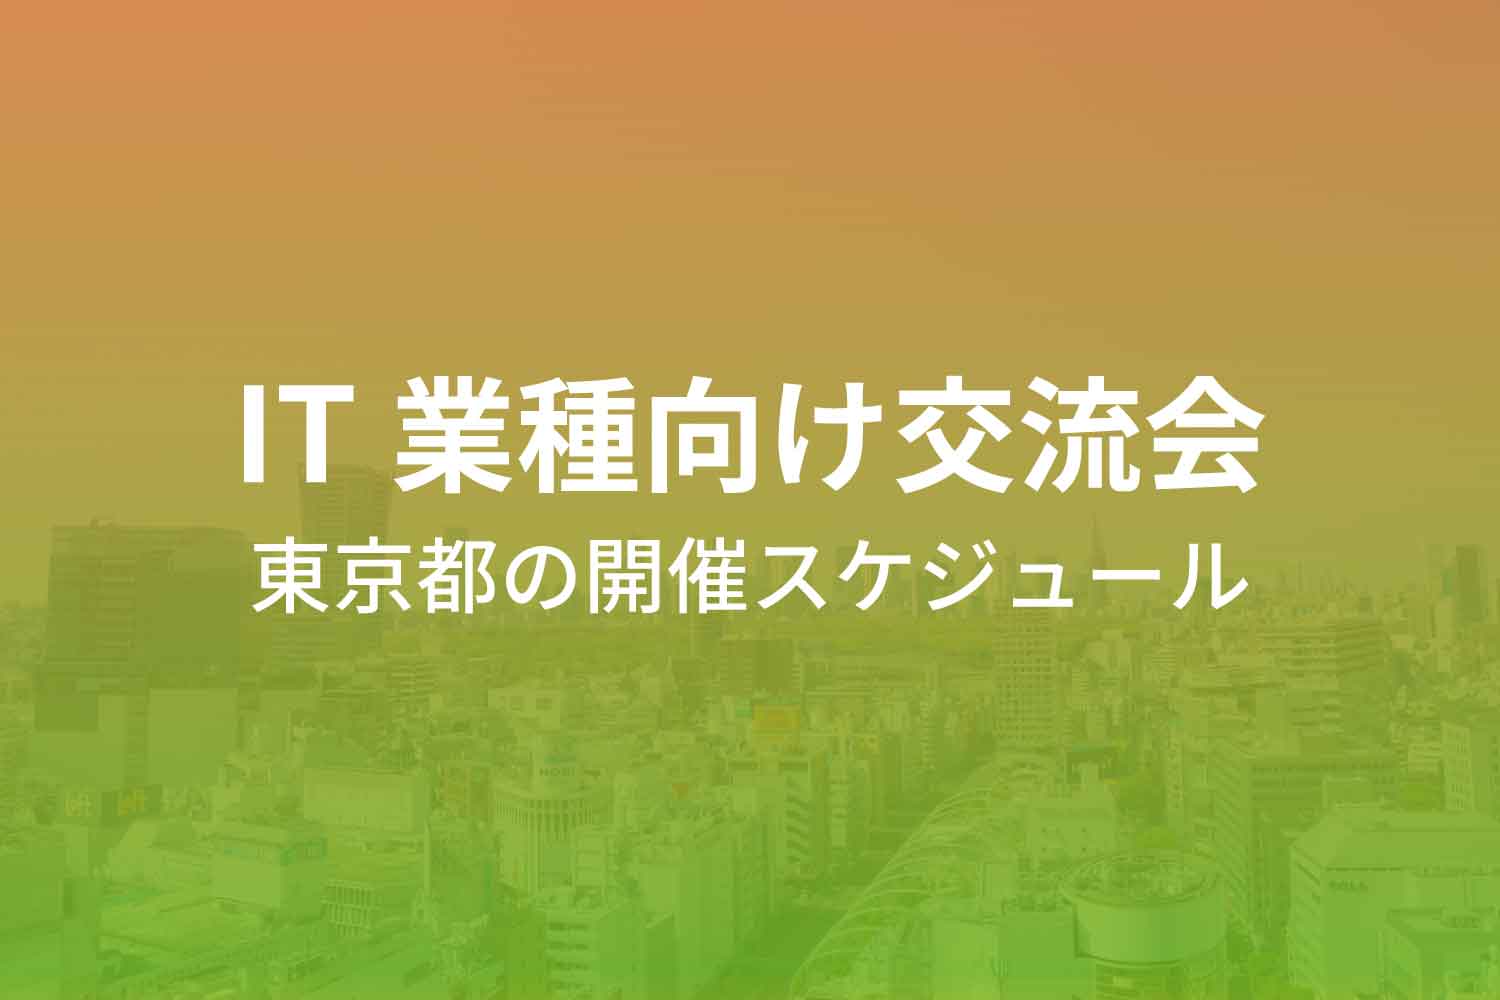 IT業界で働く人の交流会 - 東京都内のイベント日程